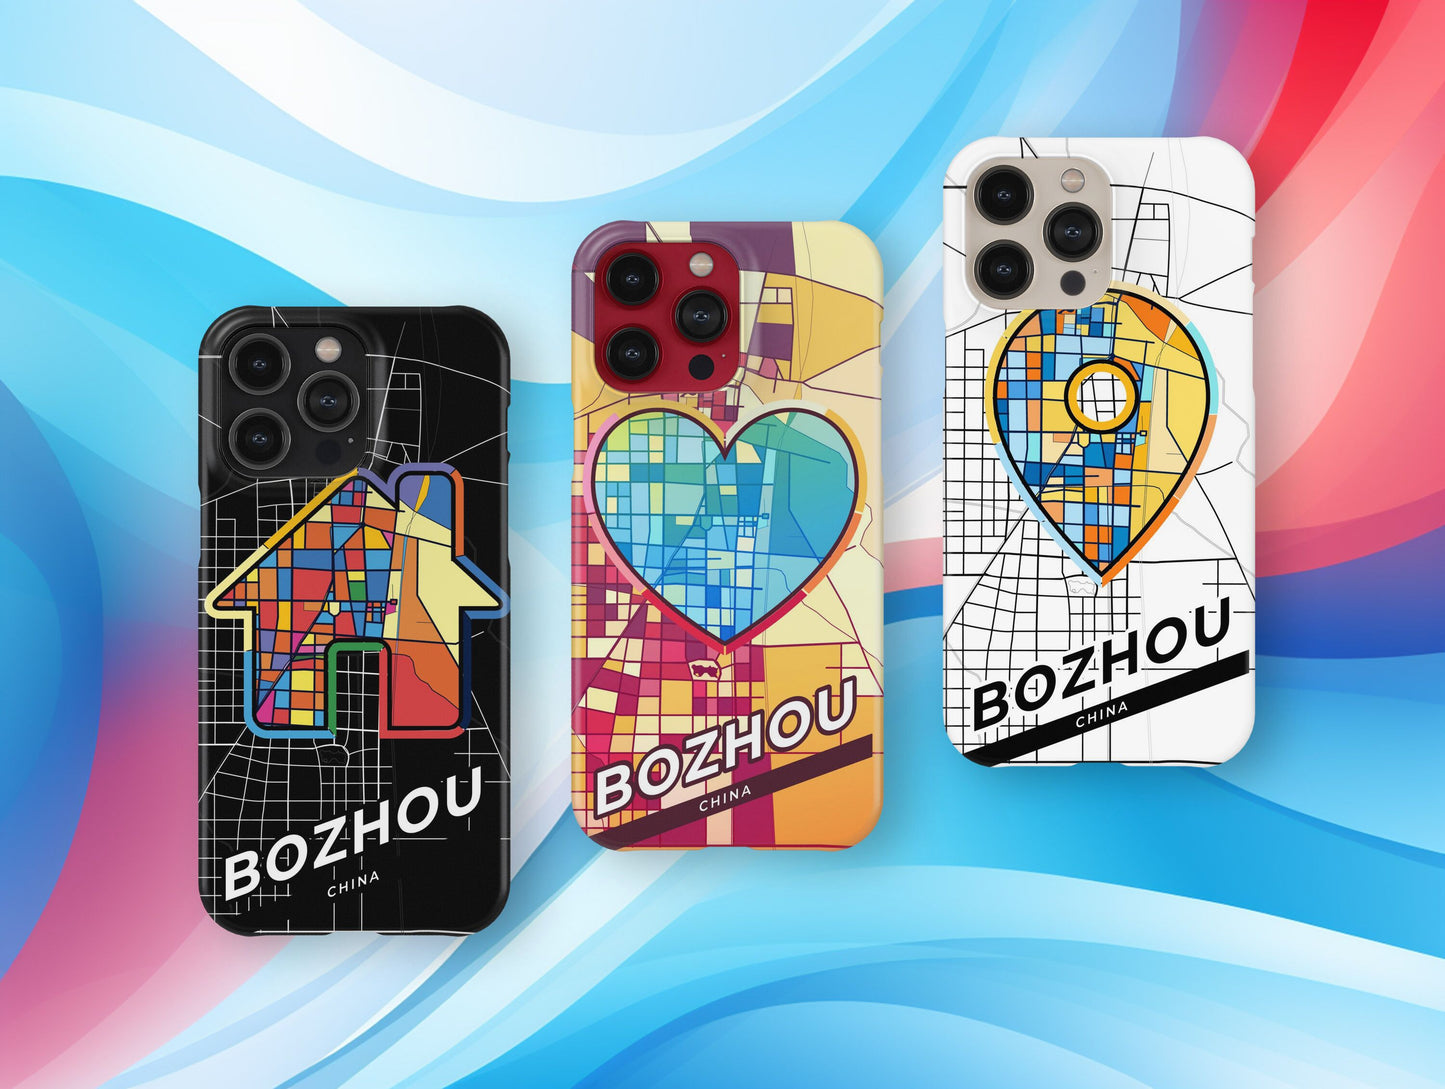 Bozhou China slim phone case with colorful icon. Birthday, wedding or housewarming gift. Couple match cases.